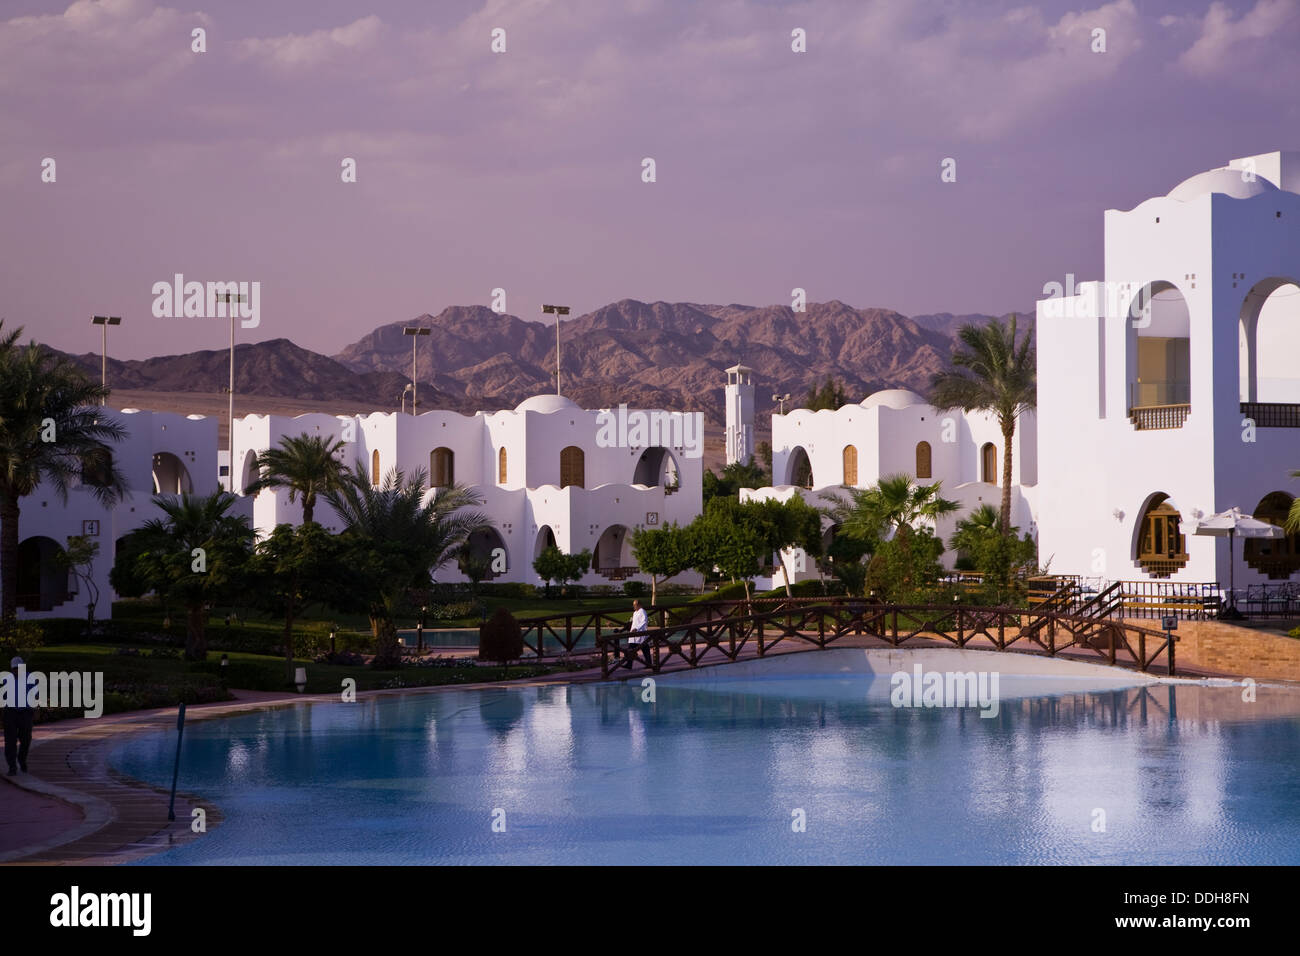 The Hilton Dahab Resort on Egypt's Sinai Peninsula Stock Photo